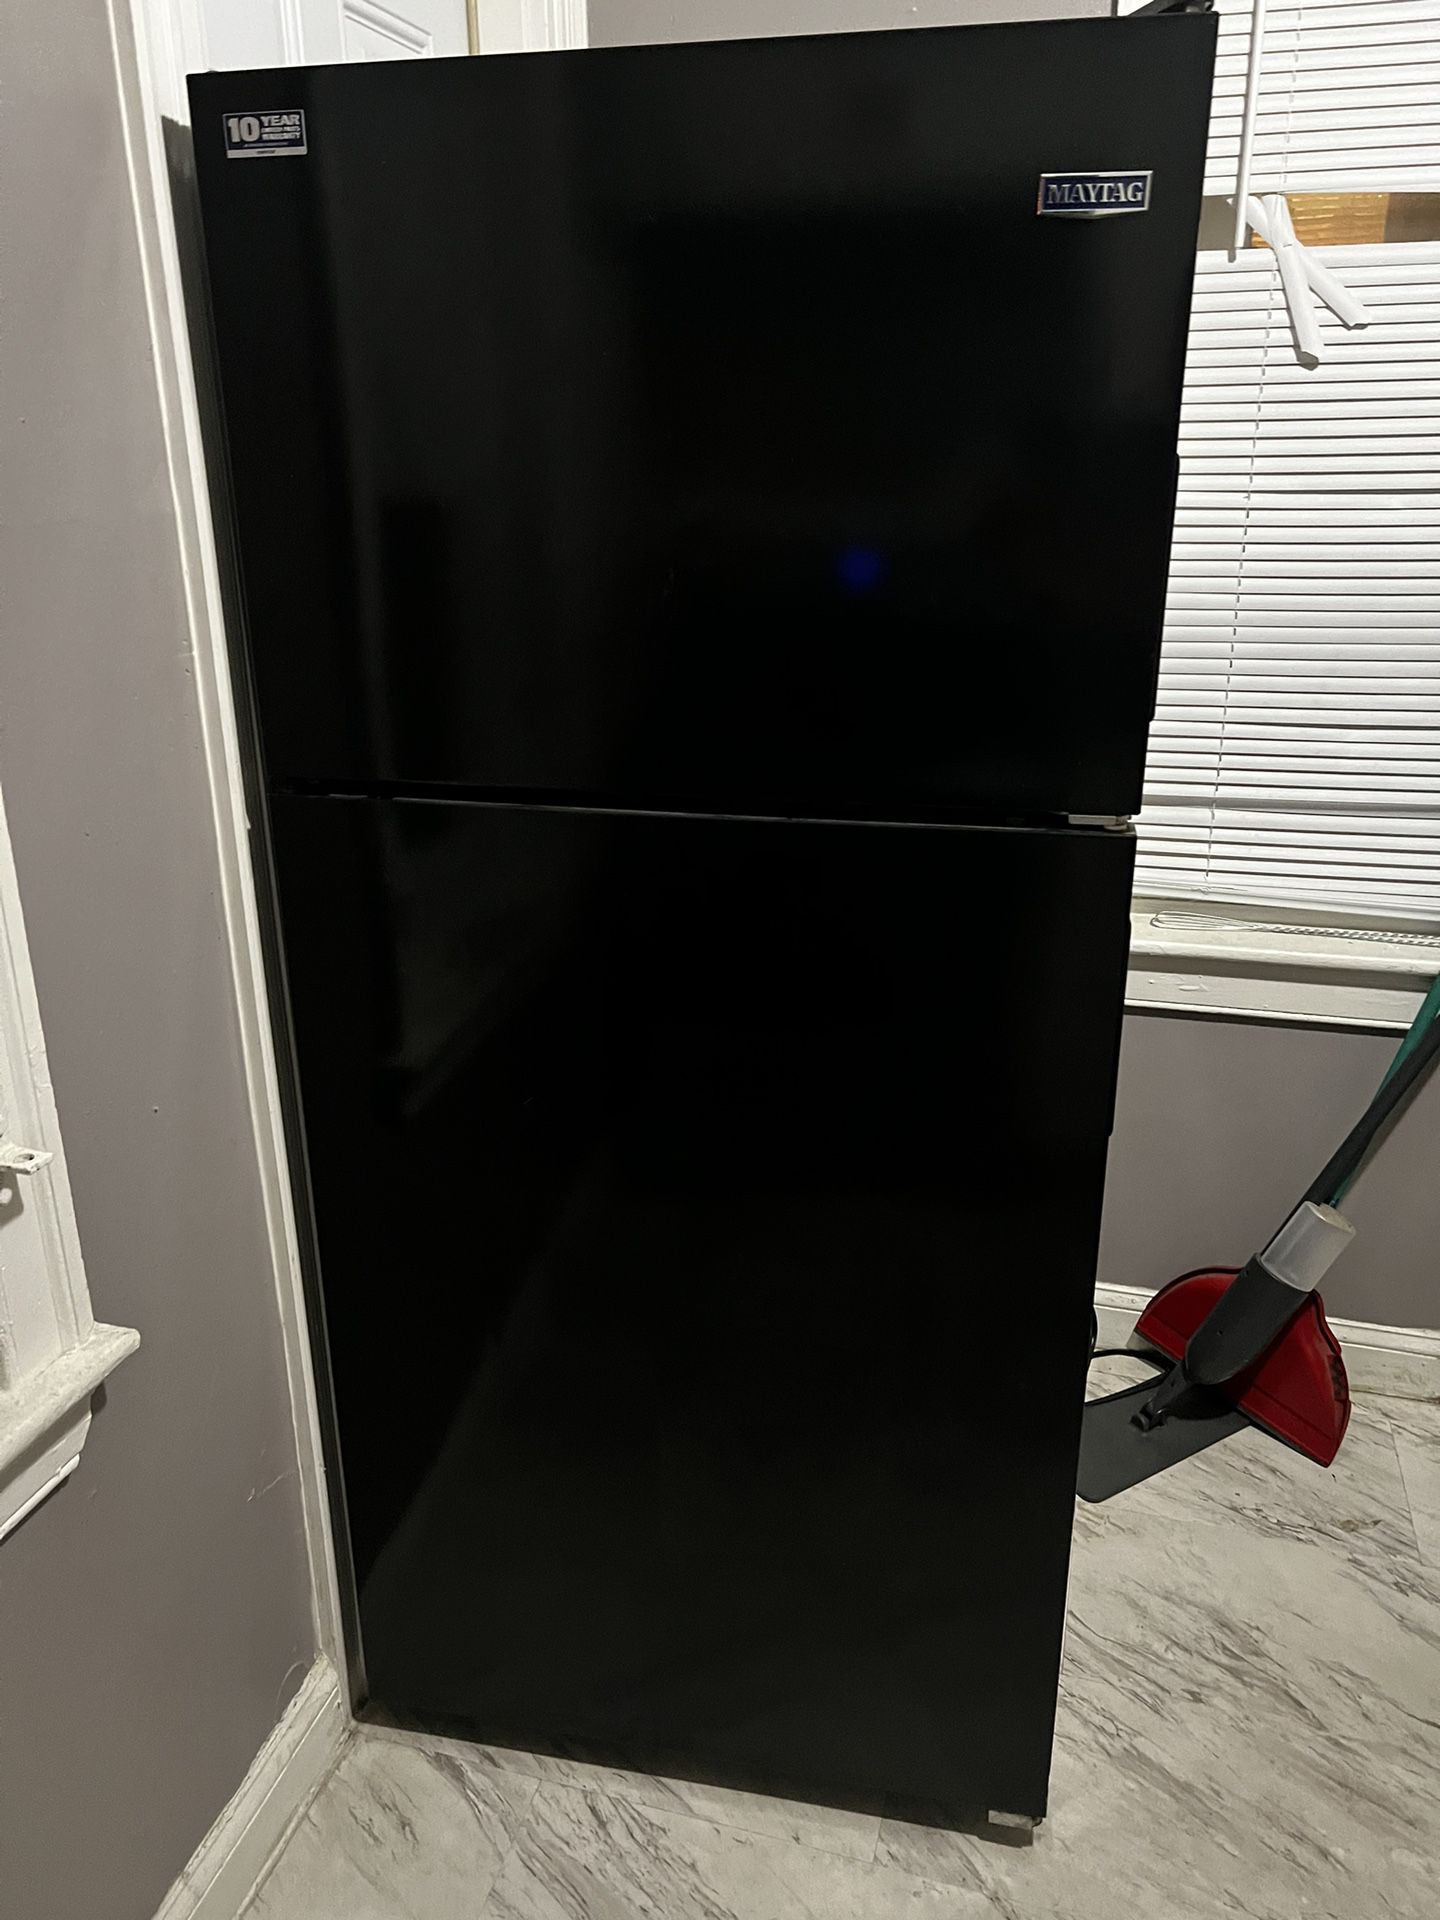 Black Maytag Refrigerator 